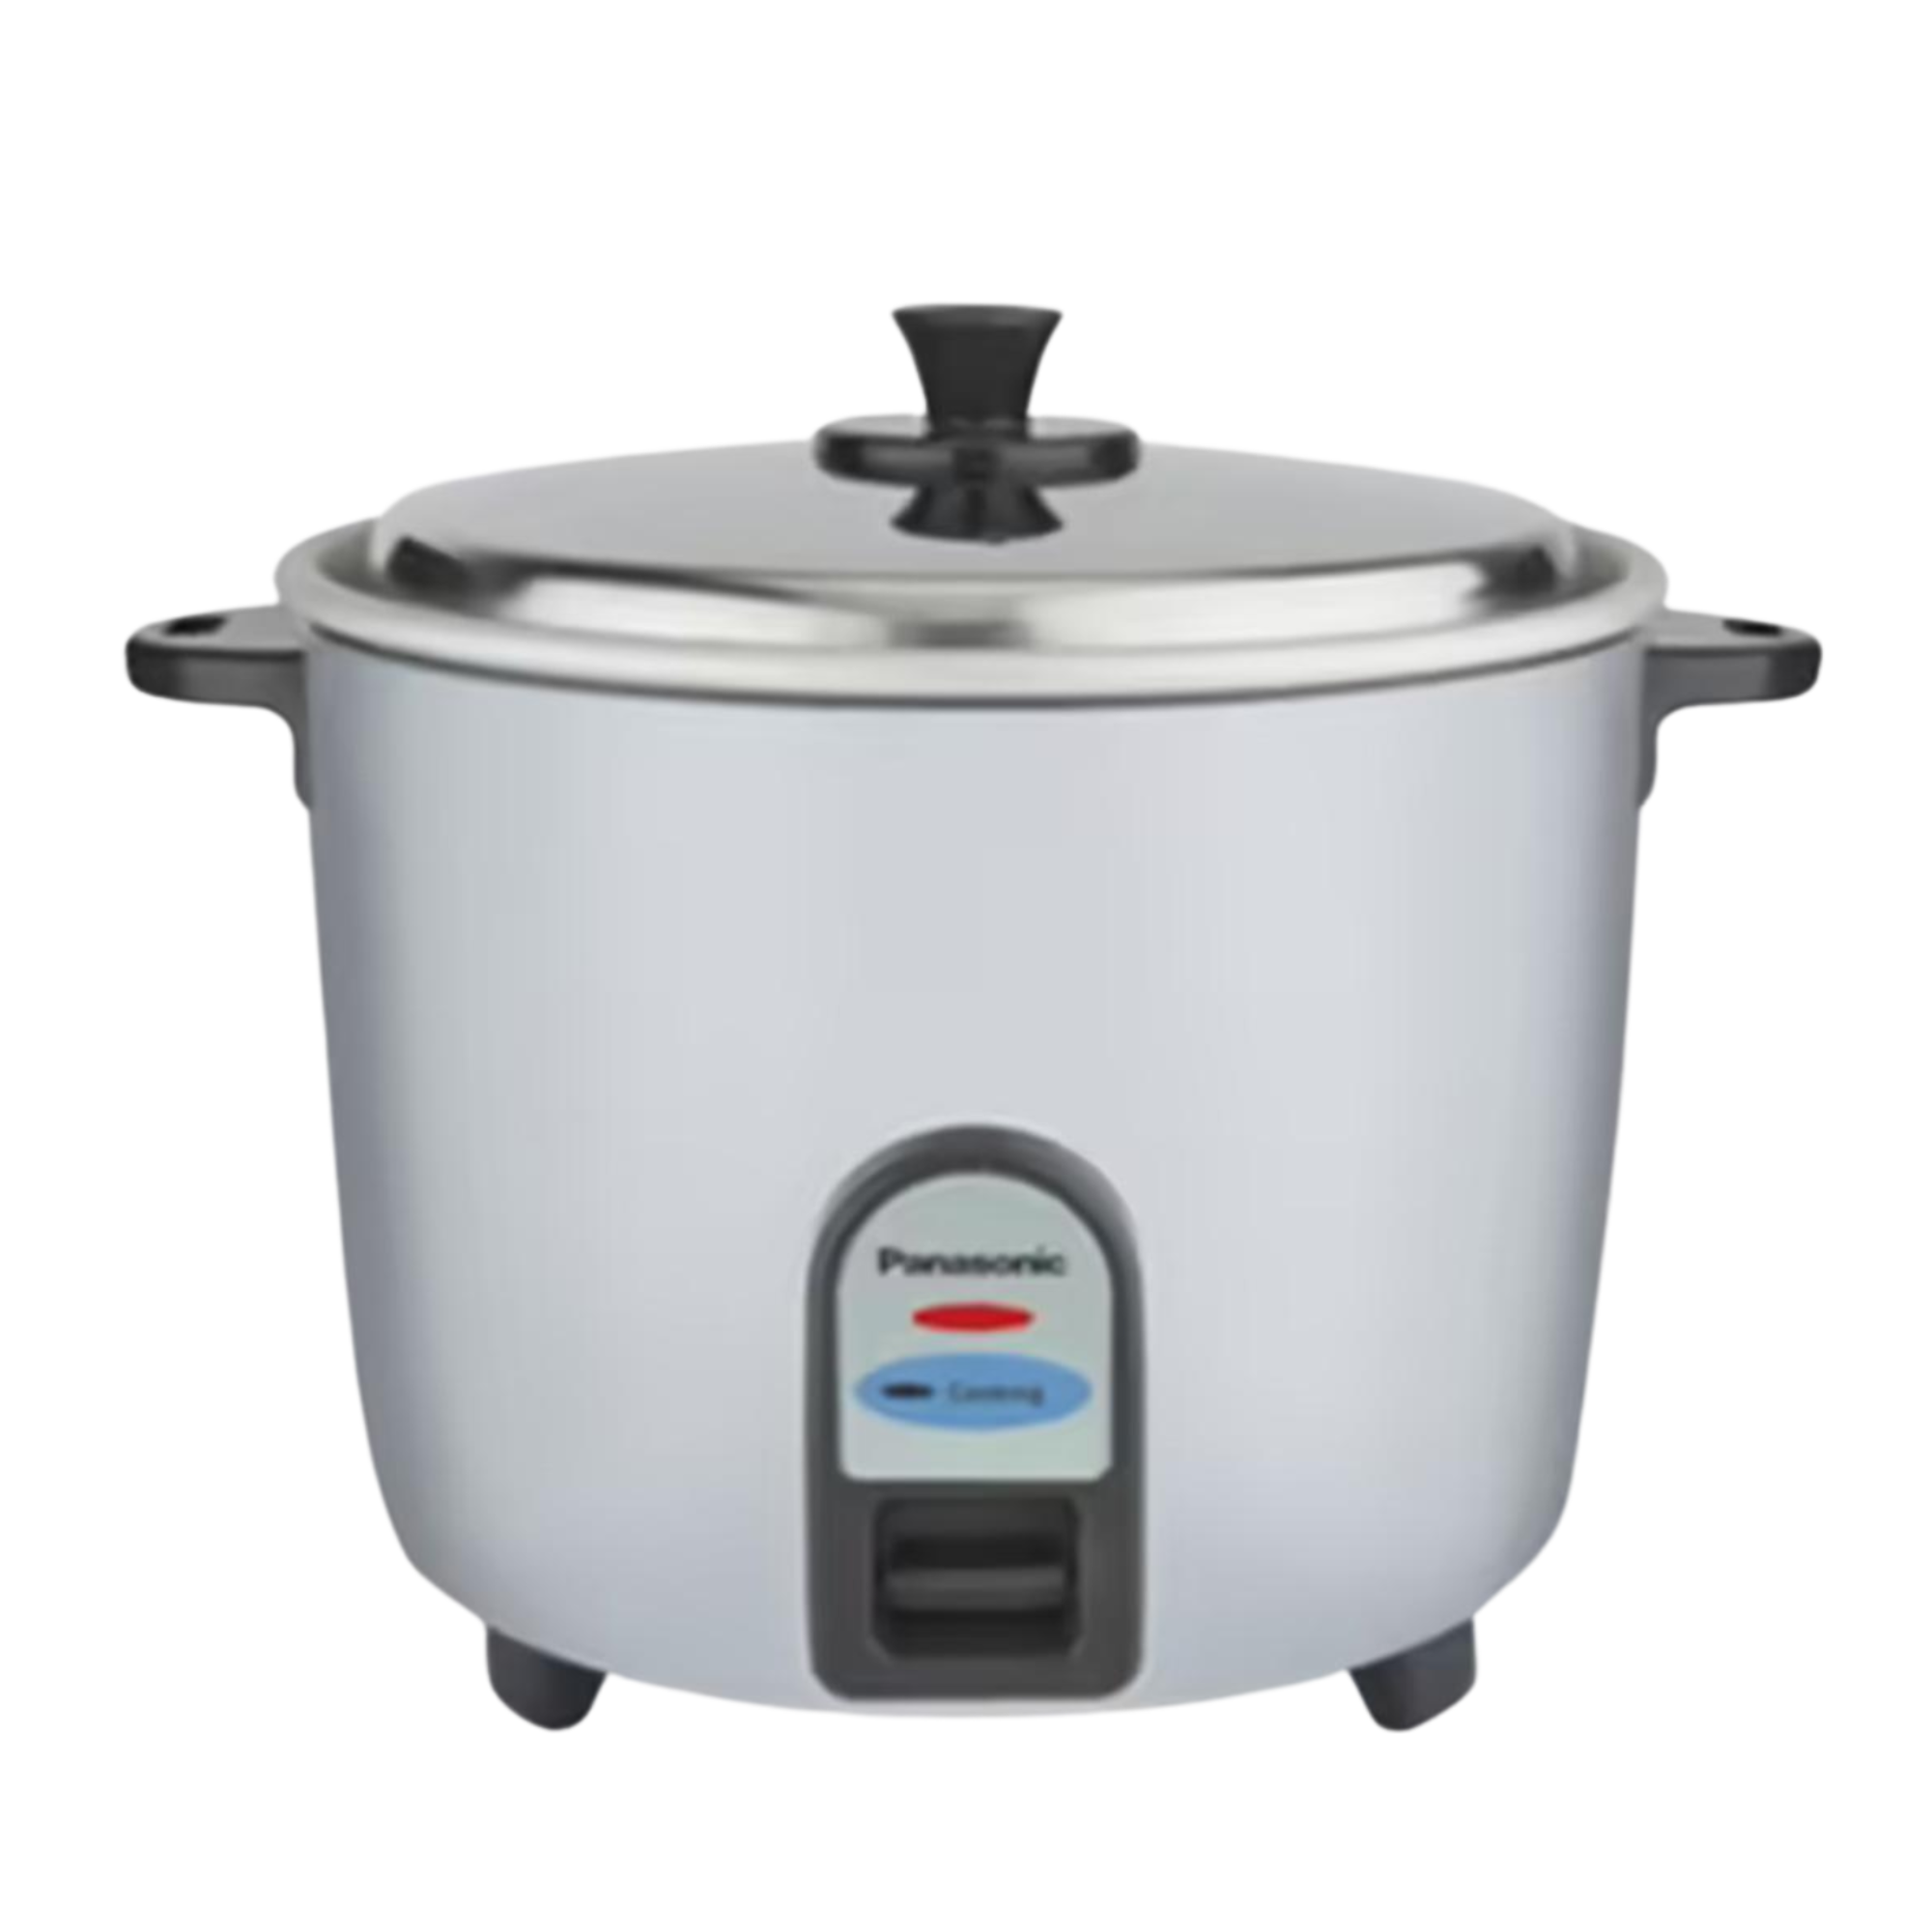 Panasonic Electric Rice Cooker 1 Litre - Grey | Best Price